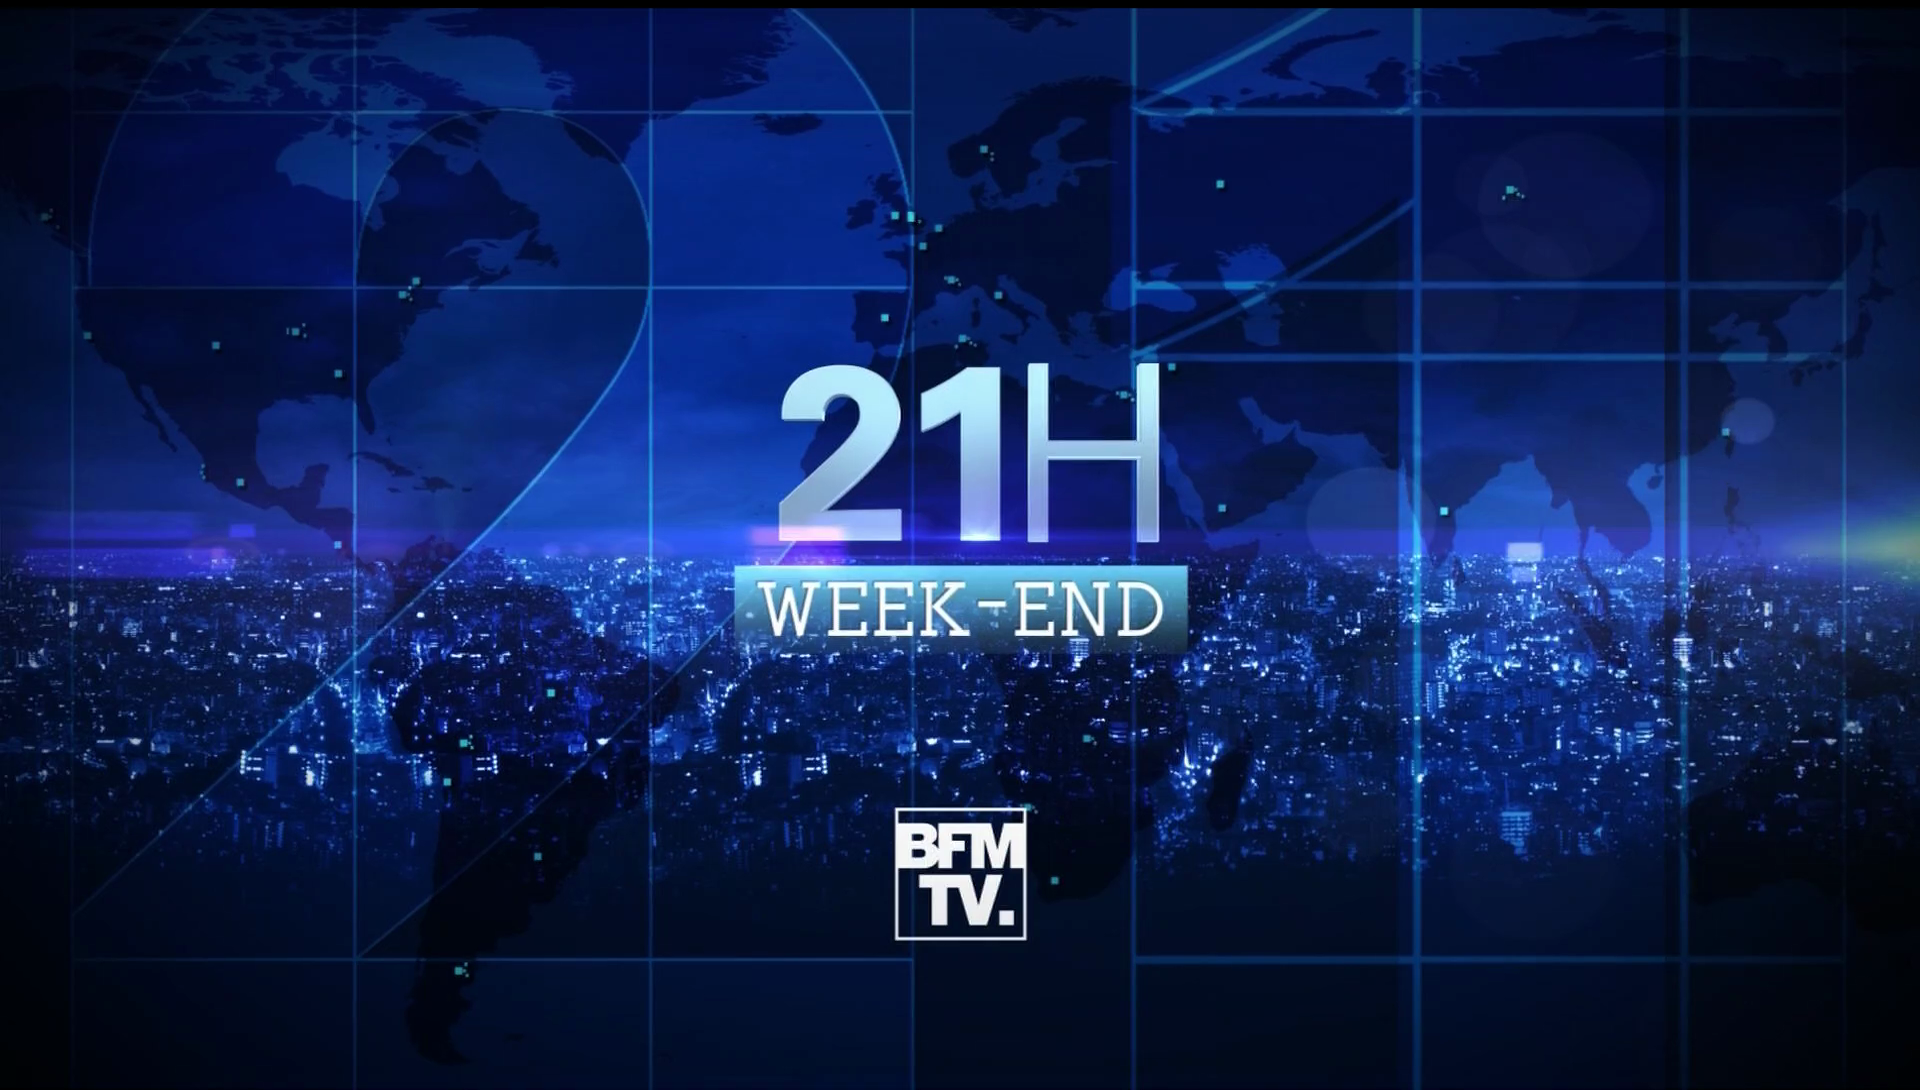 H weekend. BFMTV Франция. BFM картинка.